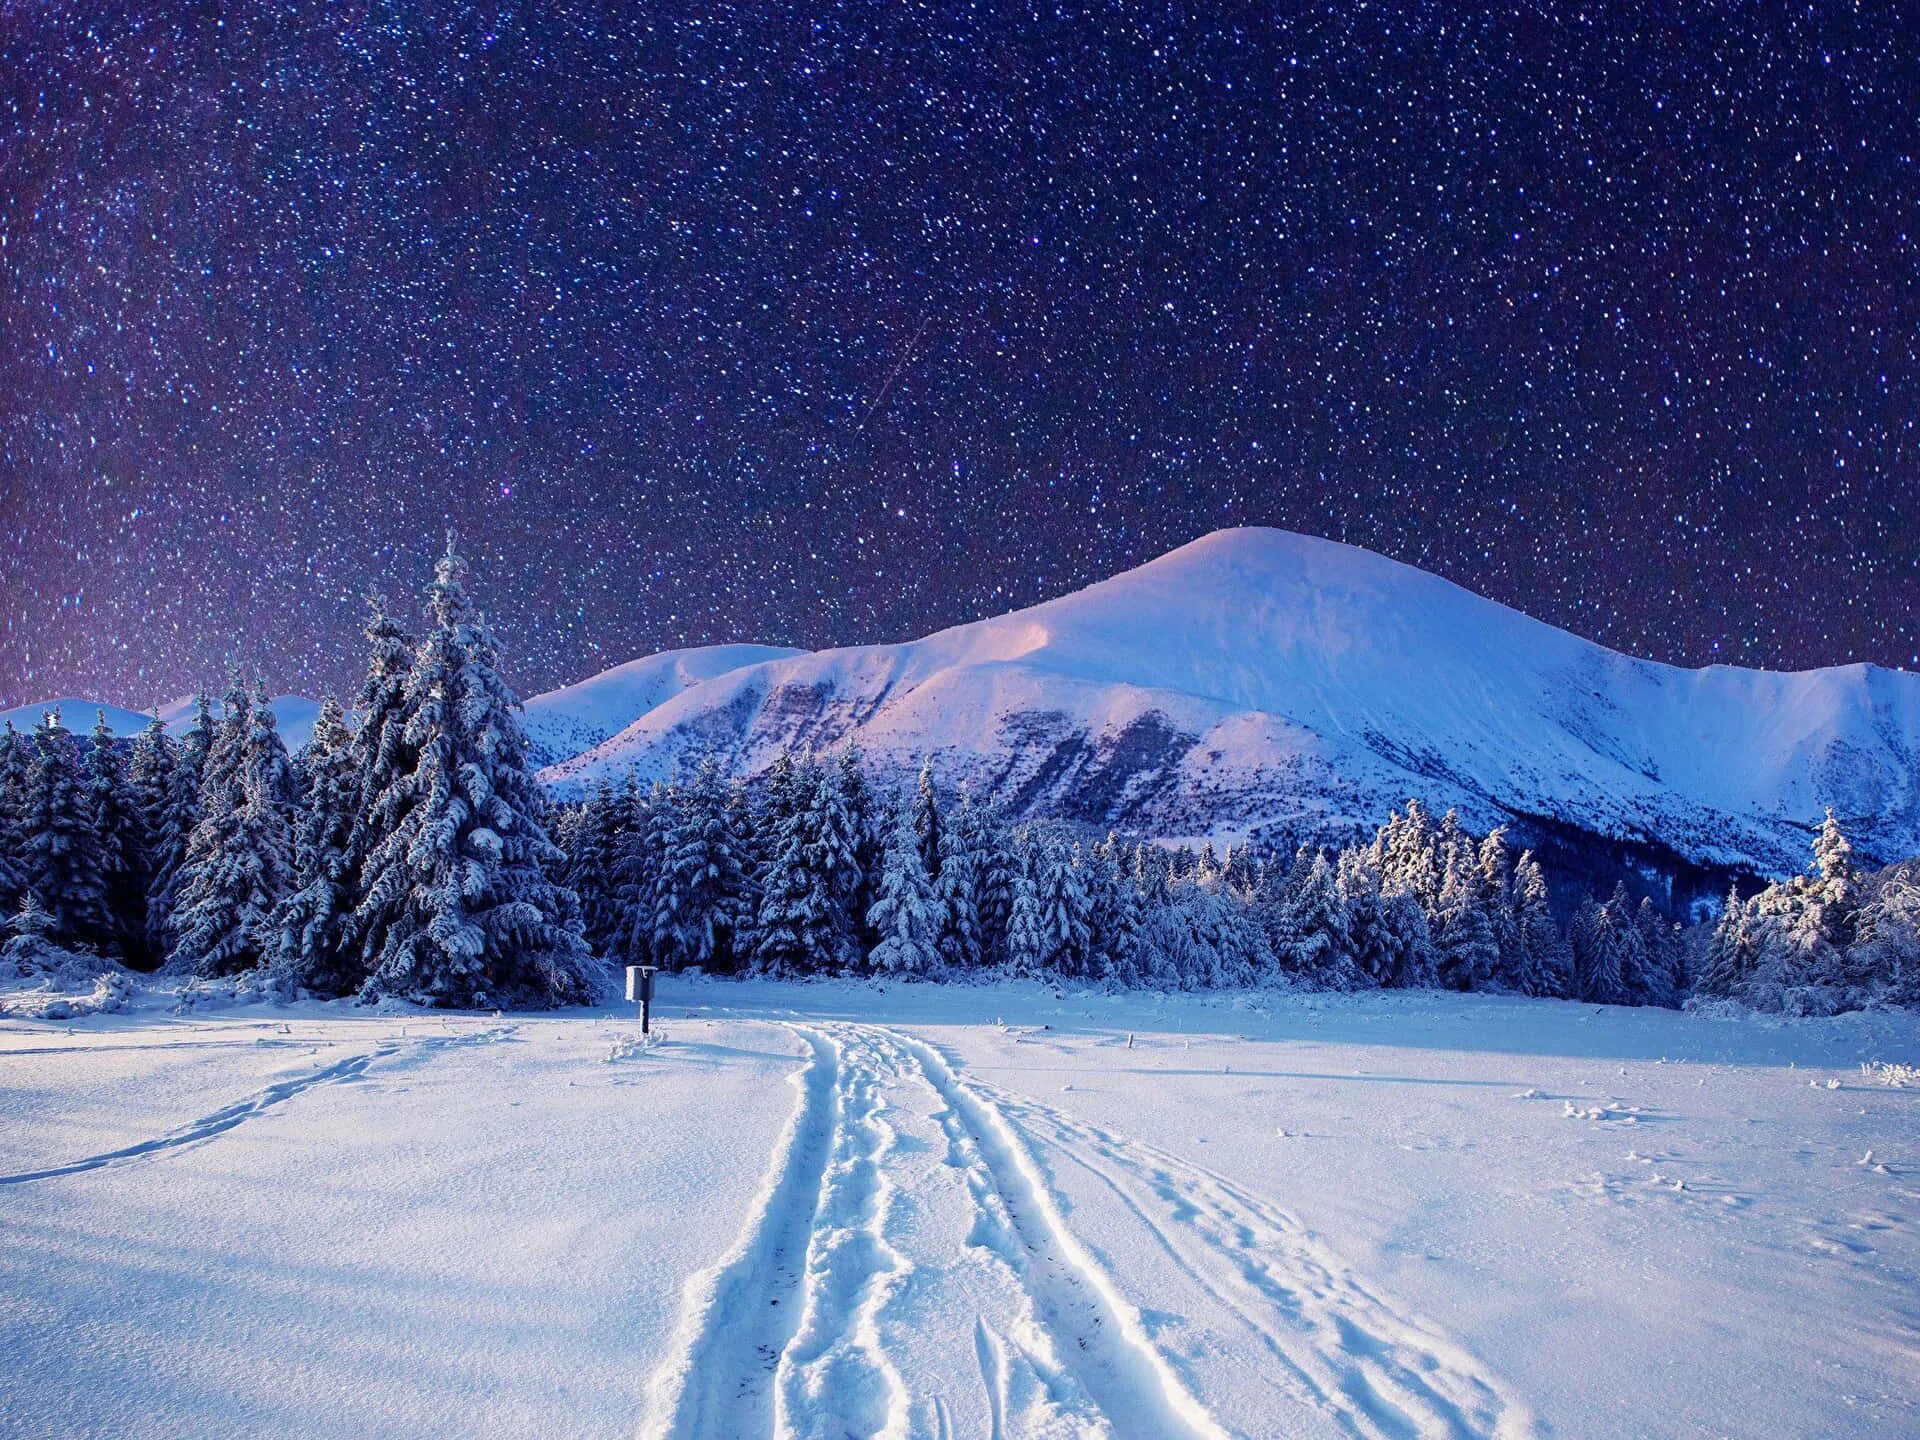 Snow is beautiful. Зимнее небо. Красивая зима. Зима ночь. Зимний пейзаж.